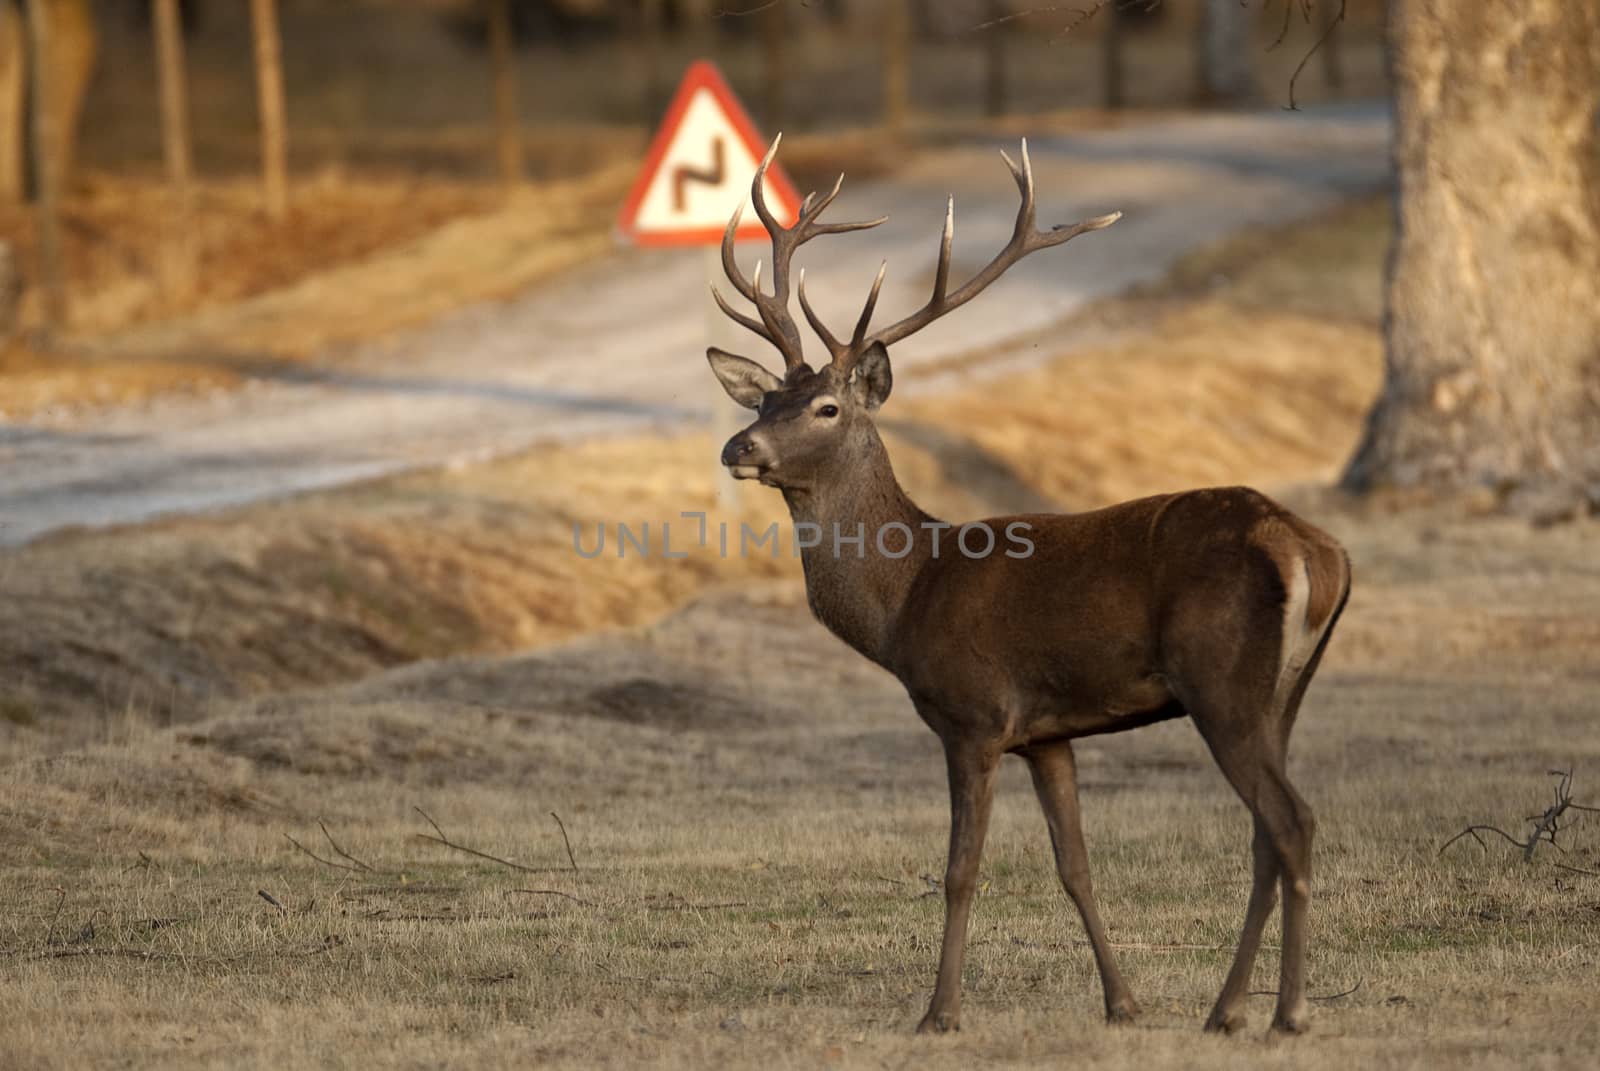 Red Deer, Deers, Cervus elaphus on the road, traffic signal  by jalonsohu@gmail.com